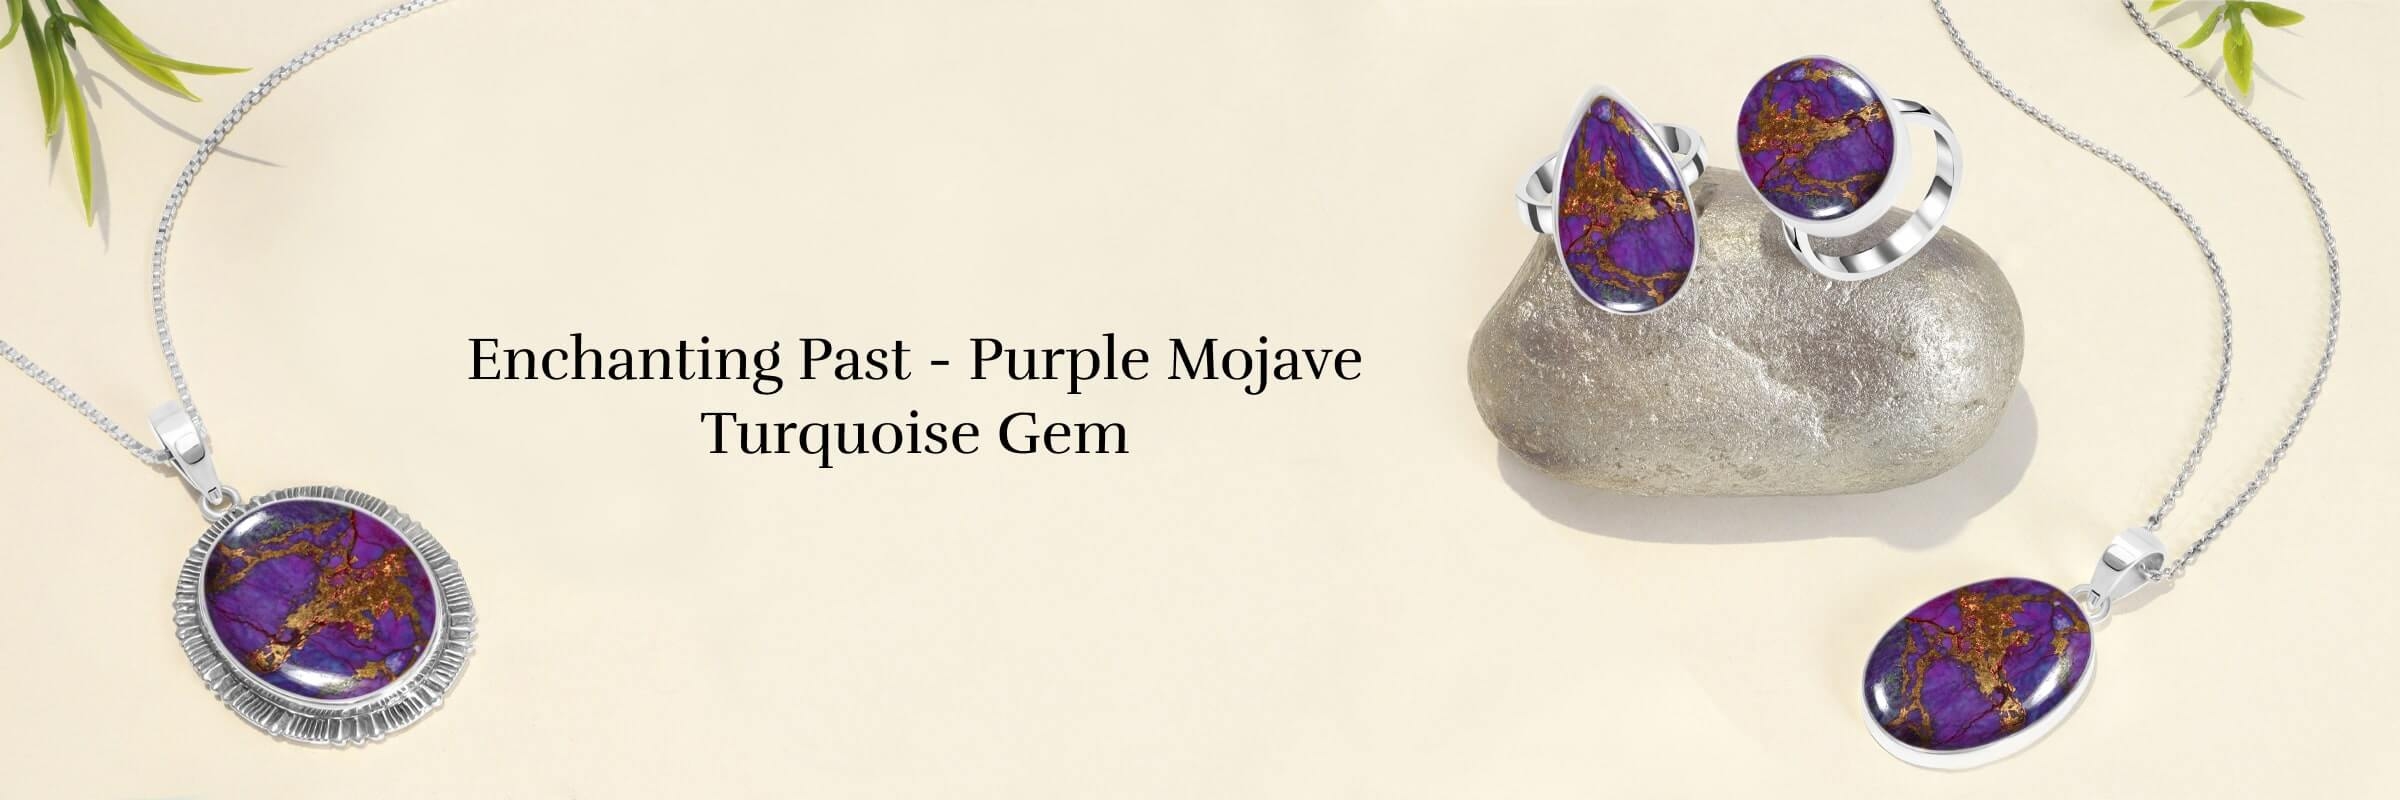 History of Purple Mojave Turquoise Stone